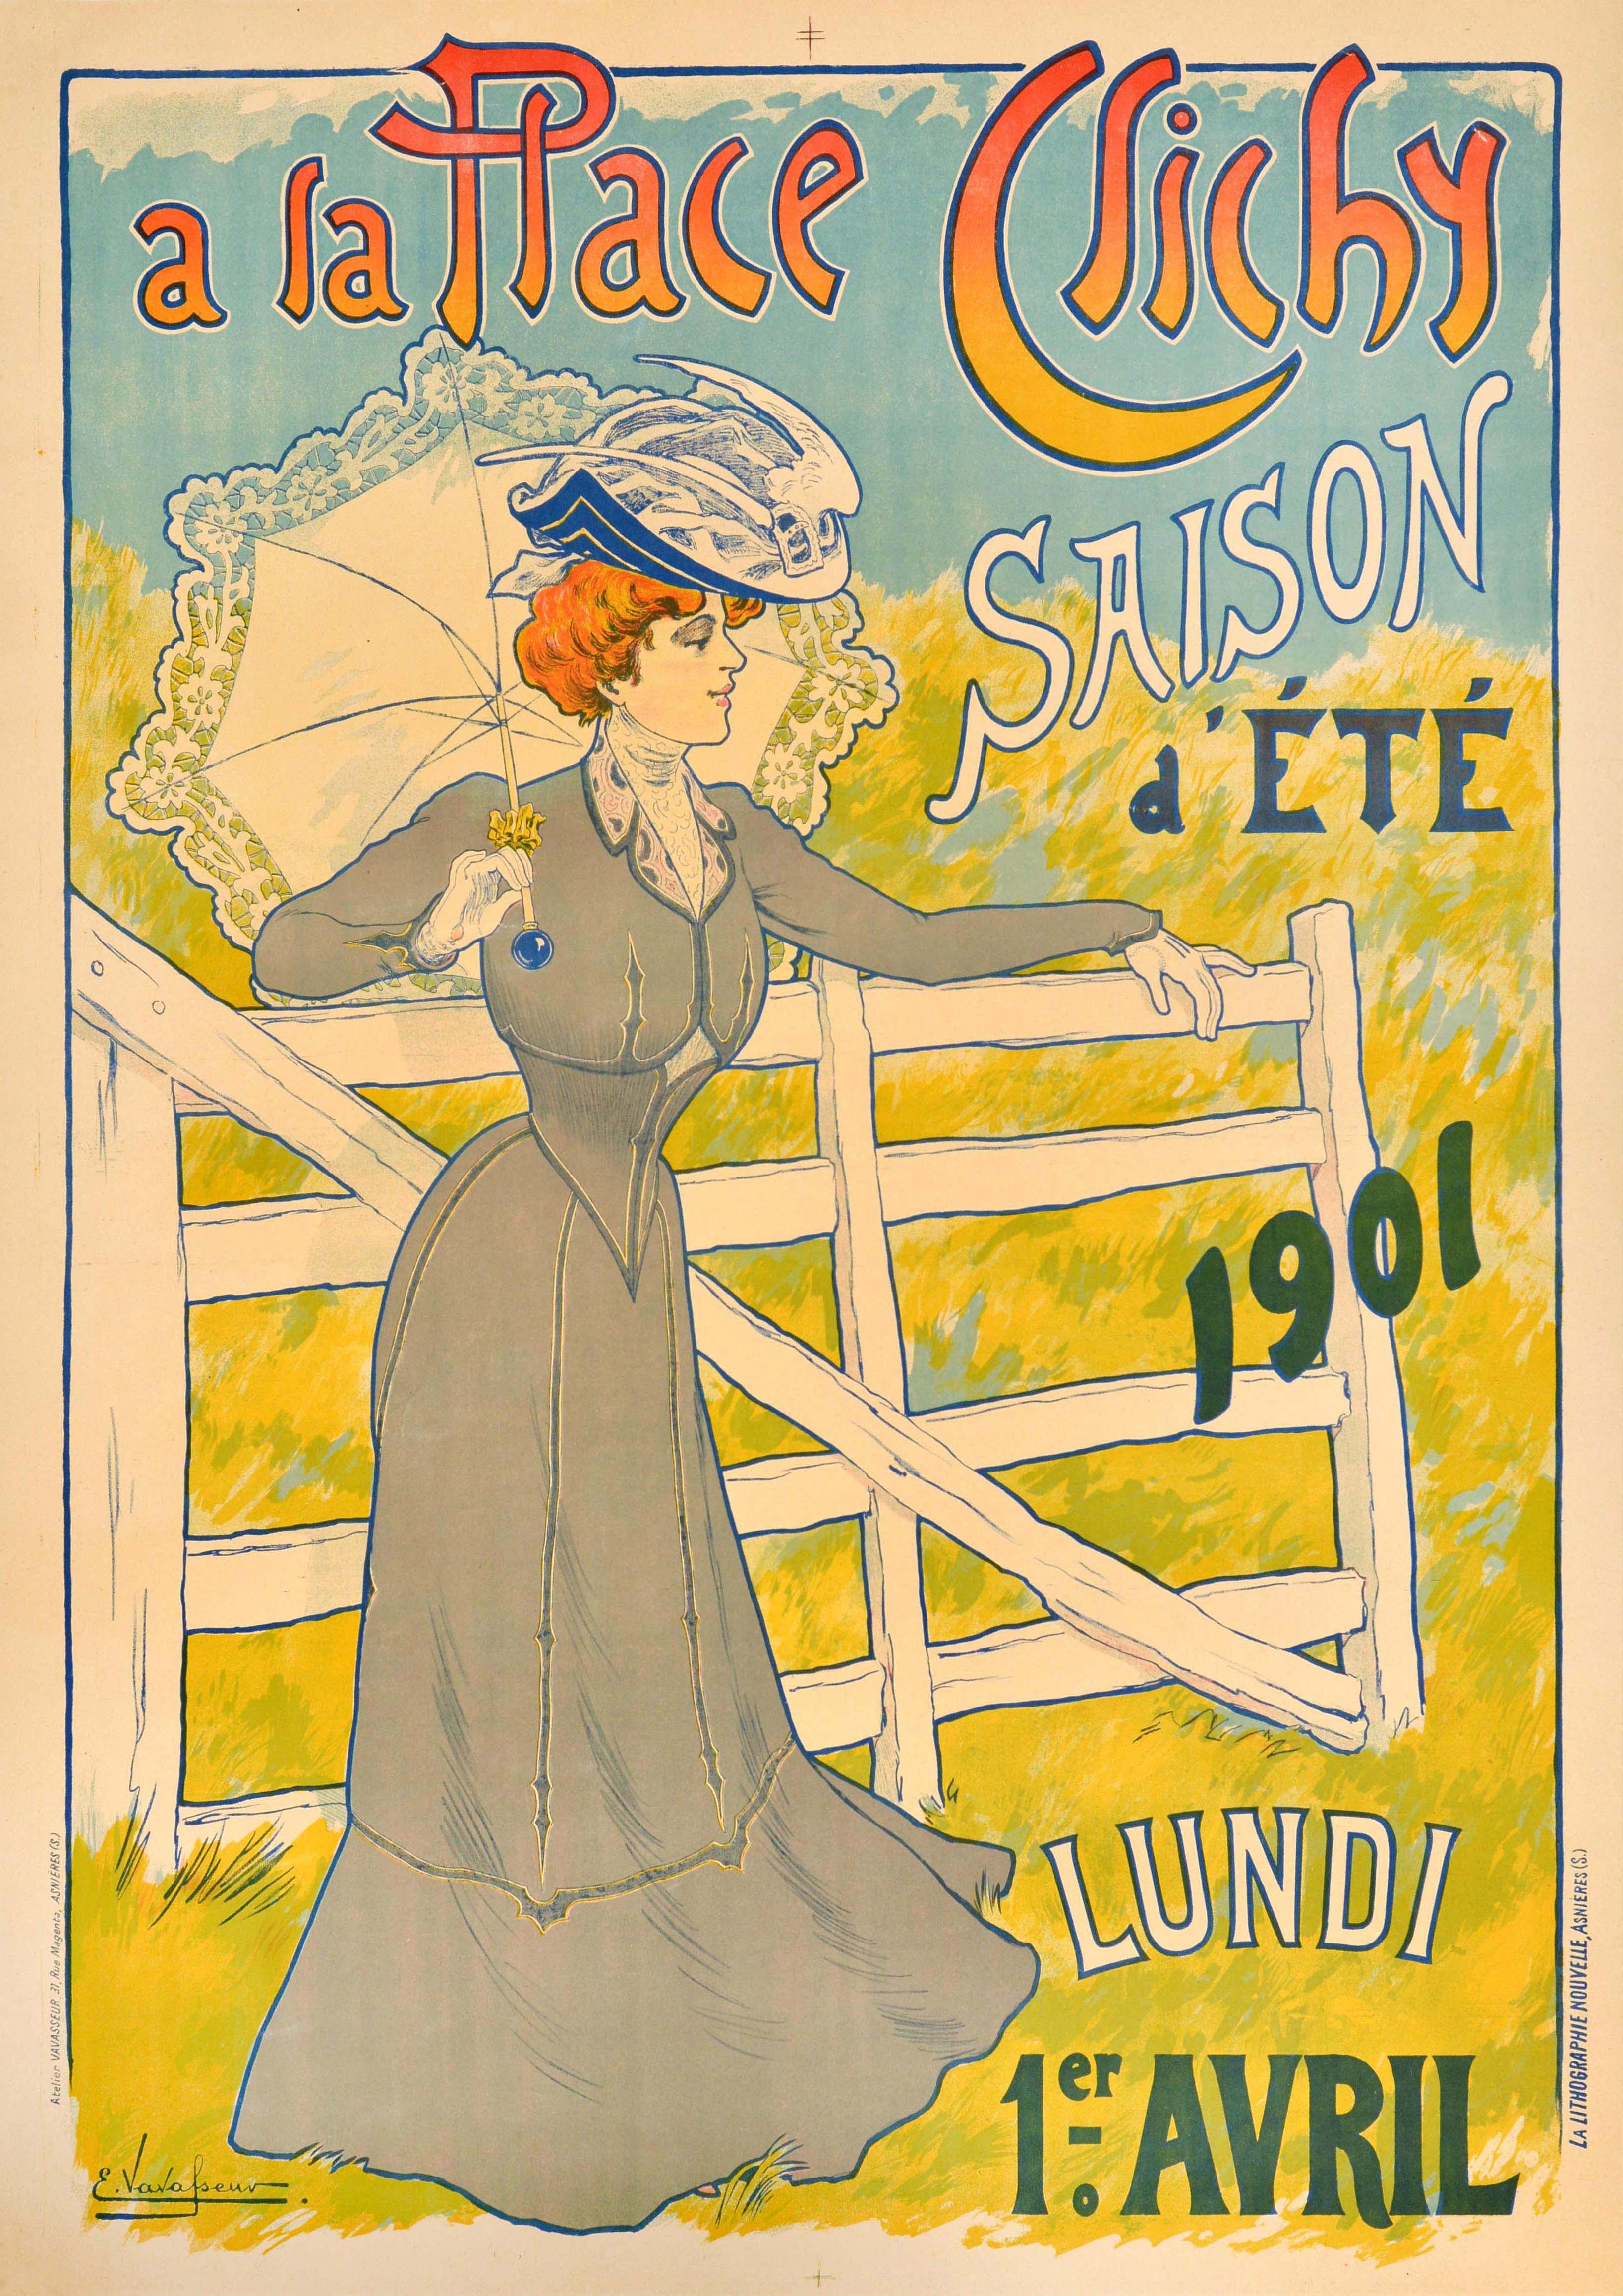 Unknown Print - Original Antique Advertising Poster A La Place Clichy Sumer Season Fashion Paris